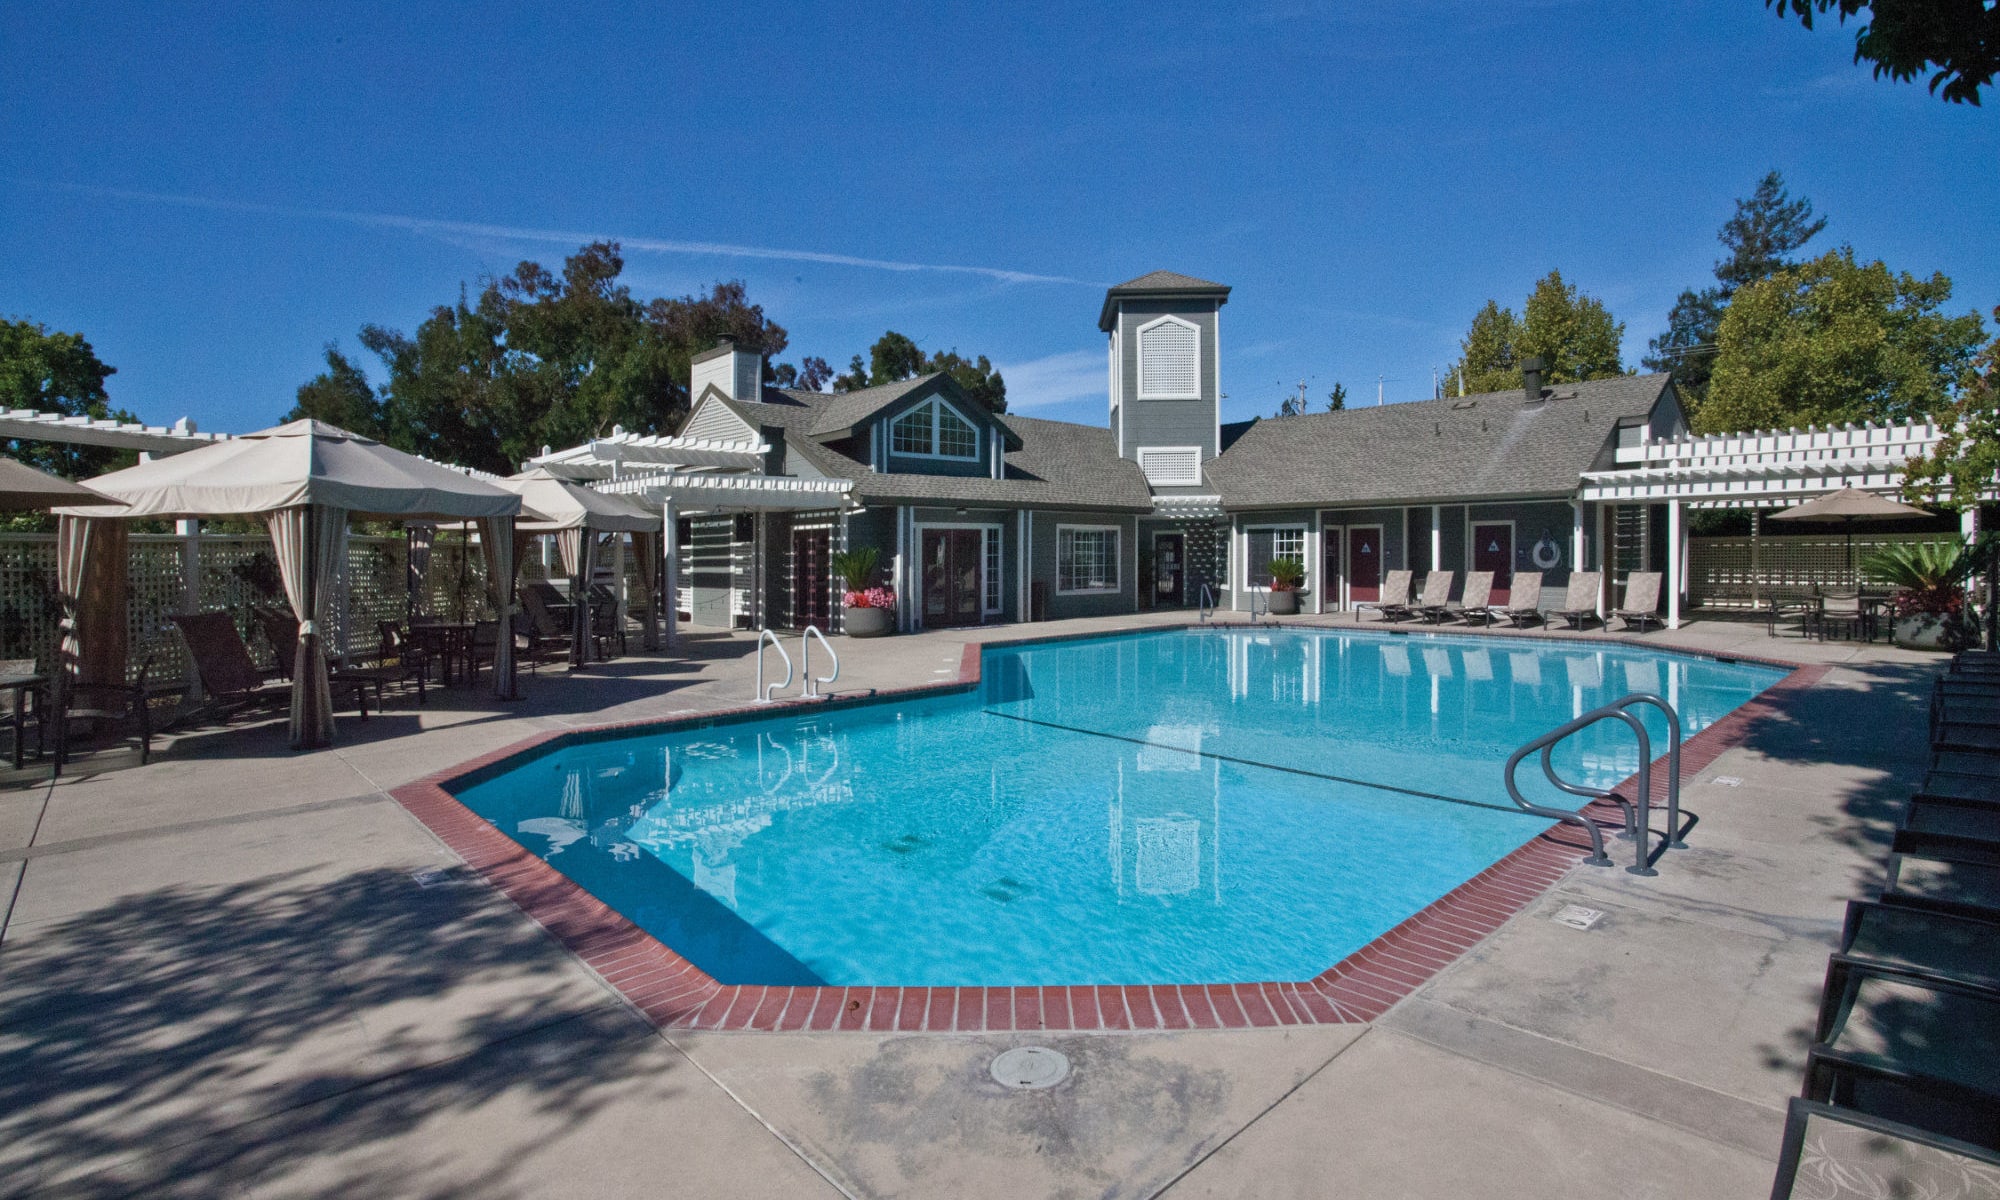 Pool at The Villages in Santa Rosa, California